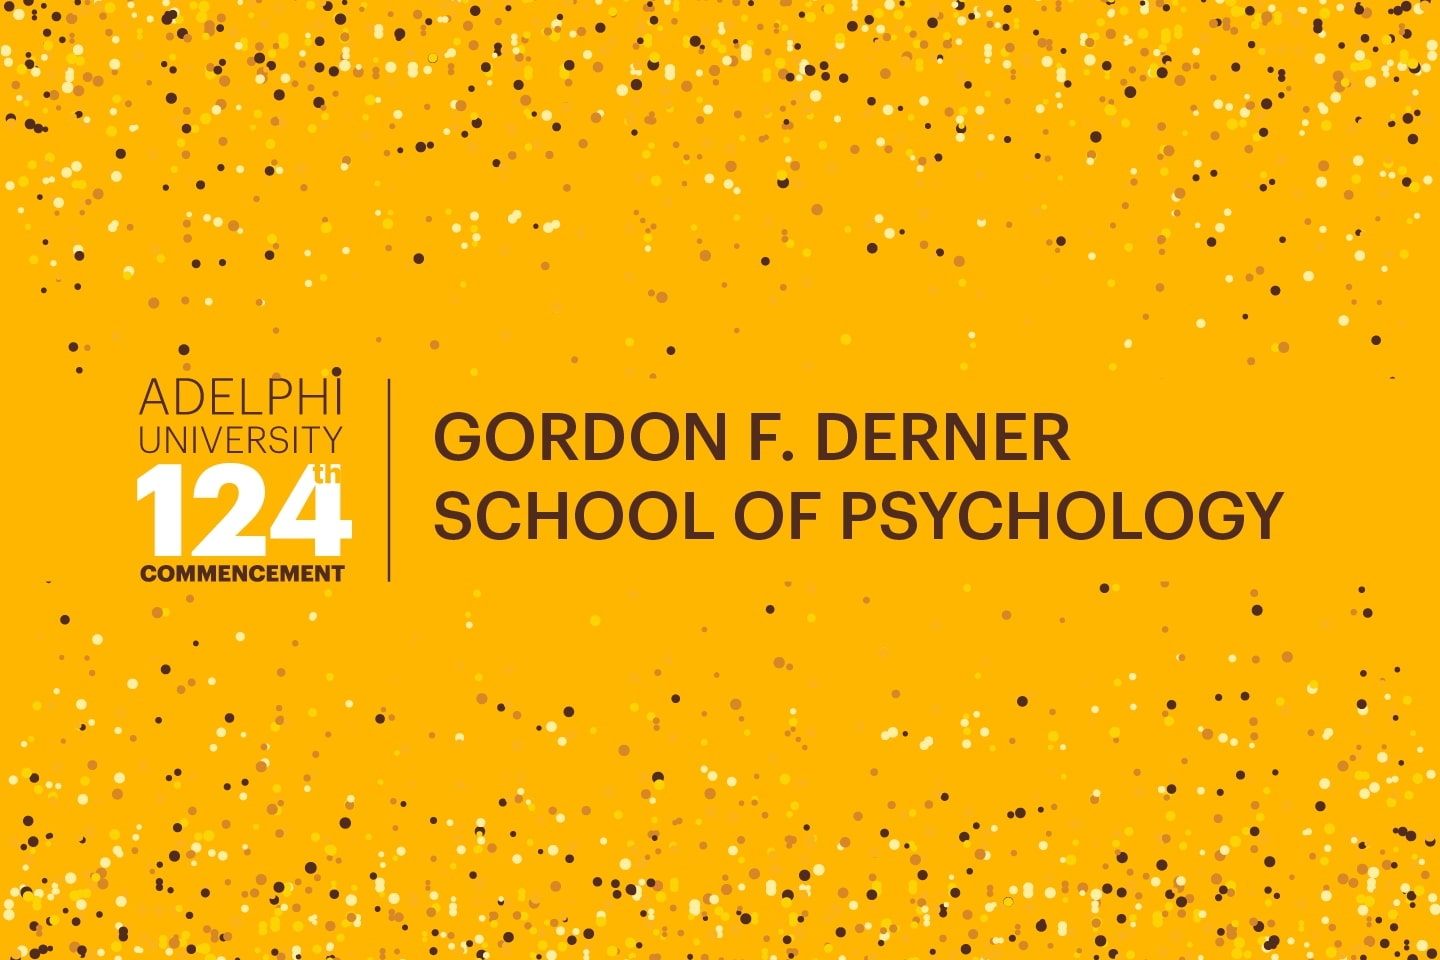 Adelphi University 124th Commencement: Gordon F. Derner School of Psychology